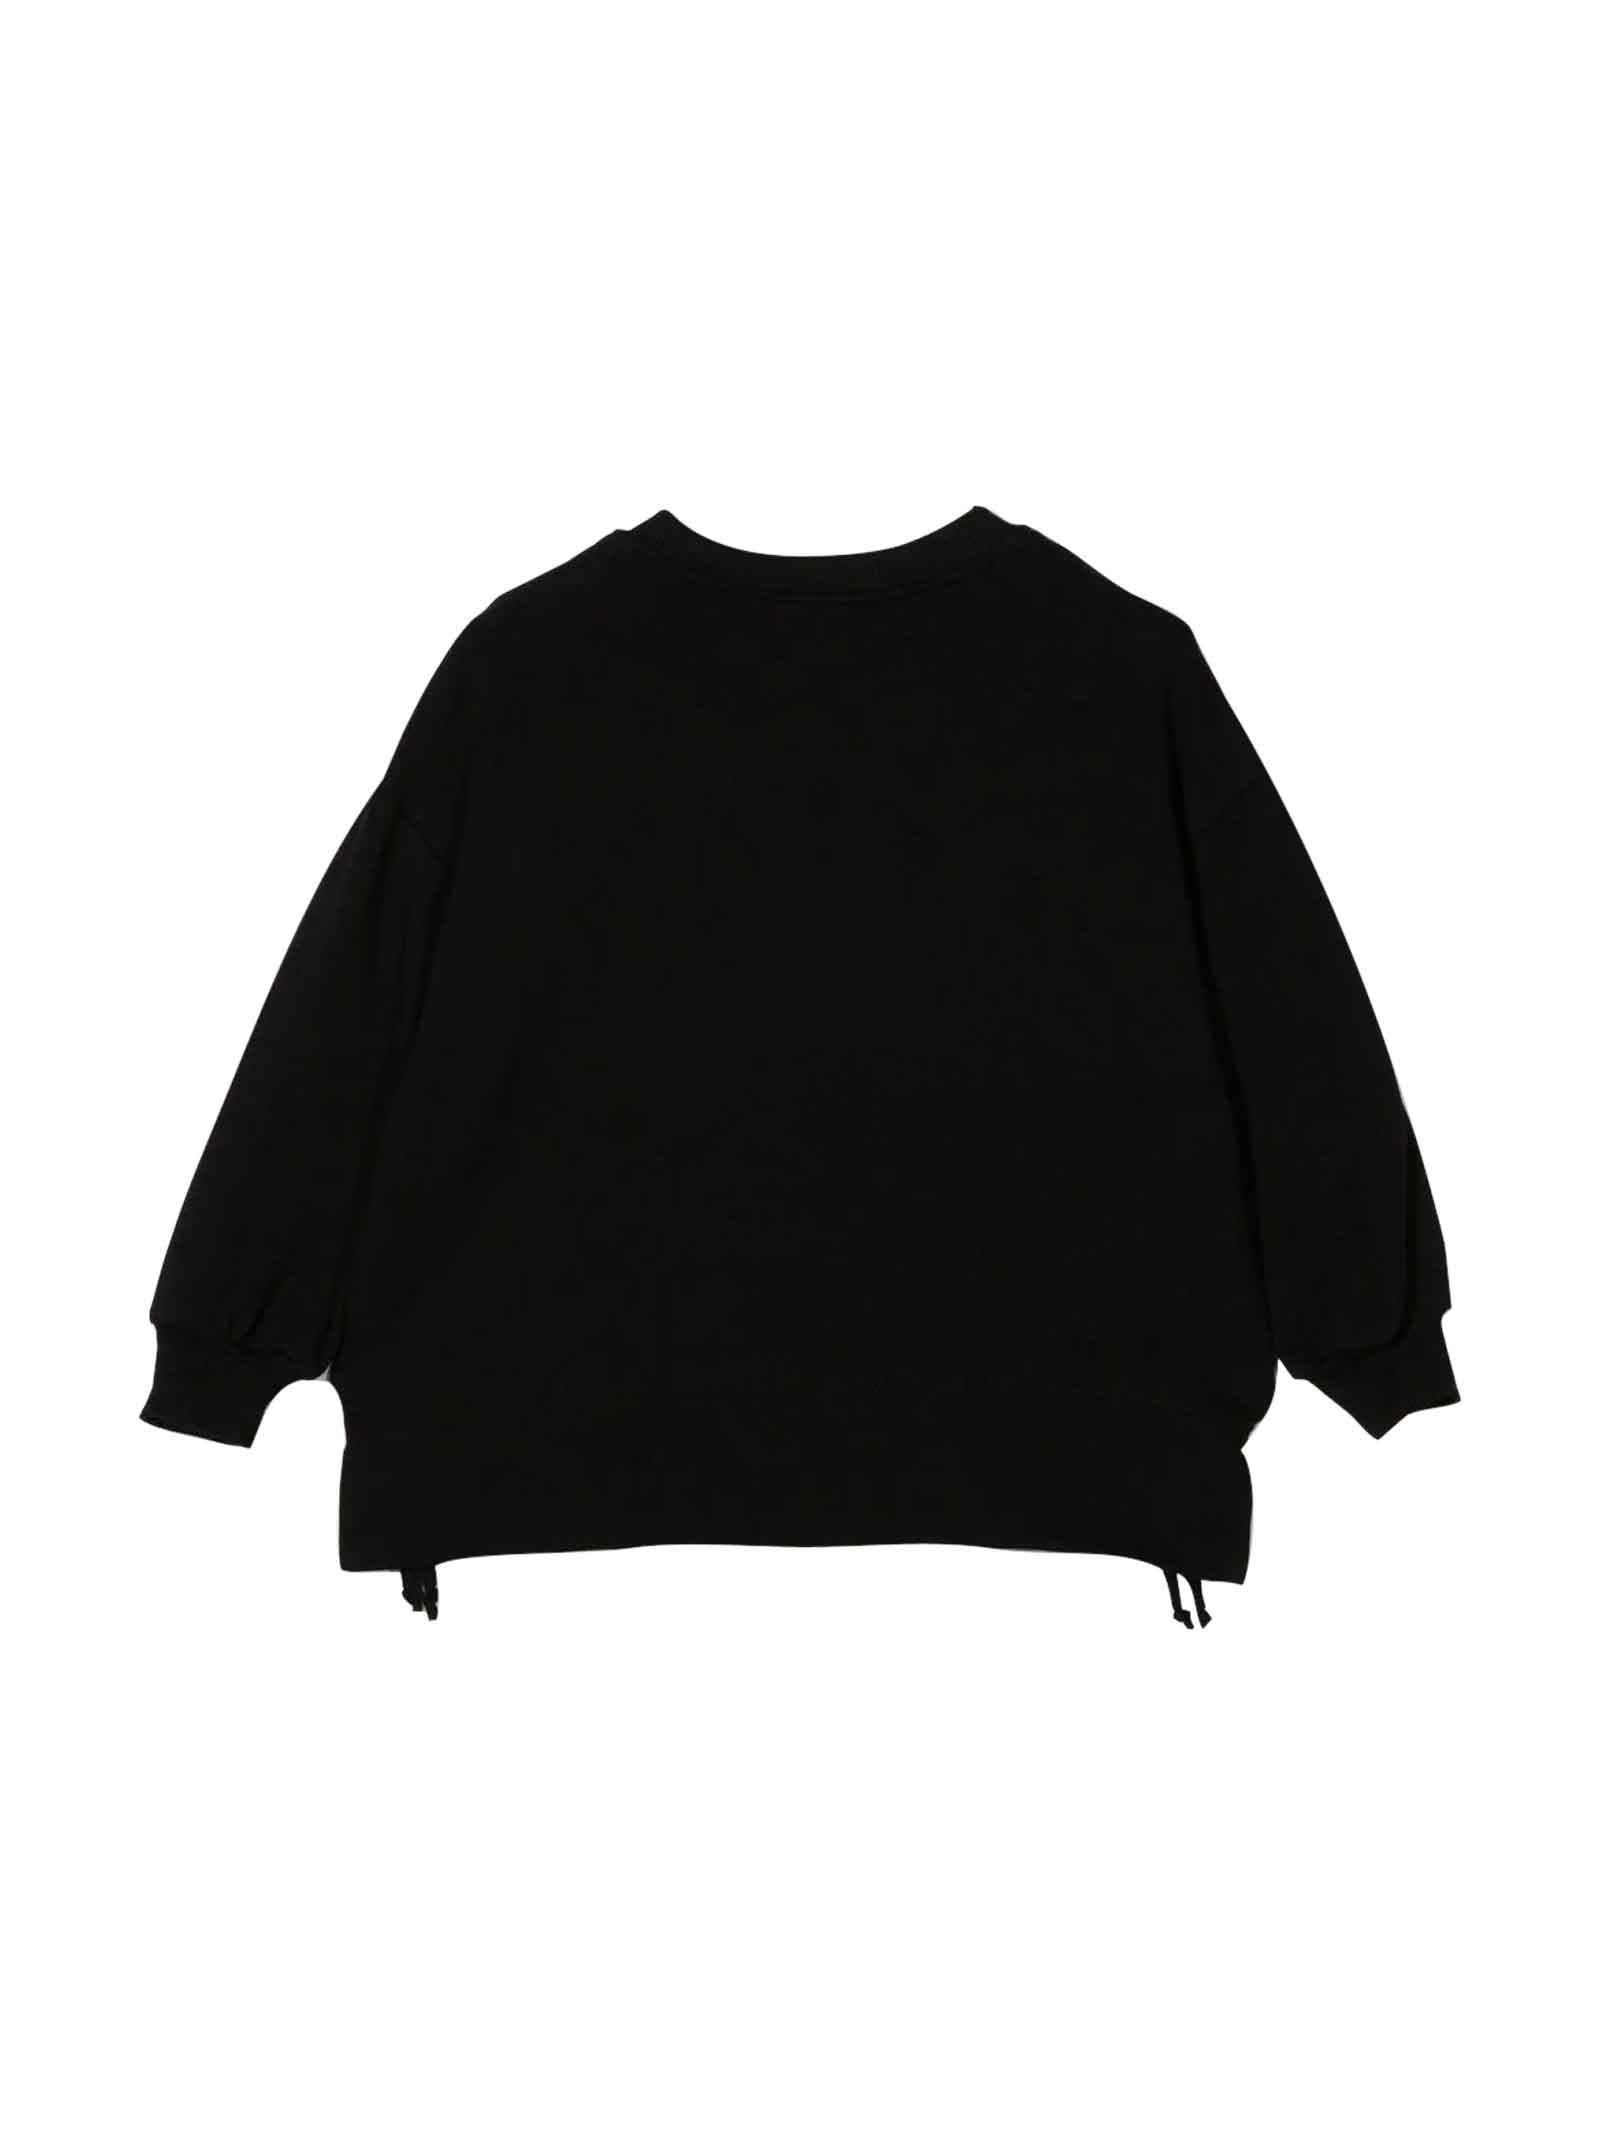 Shop Chiara Ferragni Black Sweatshirt Girl